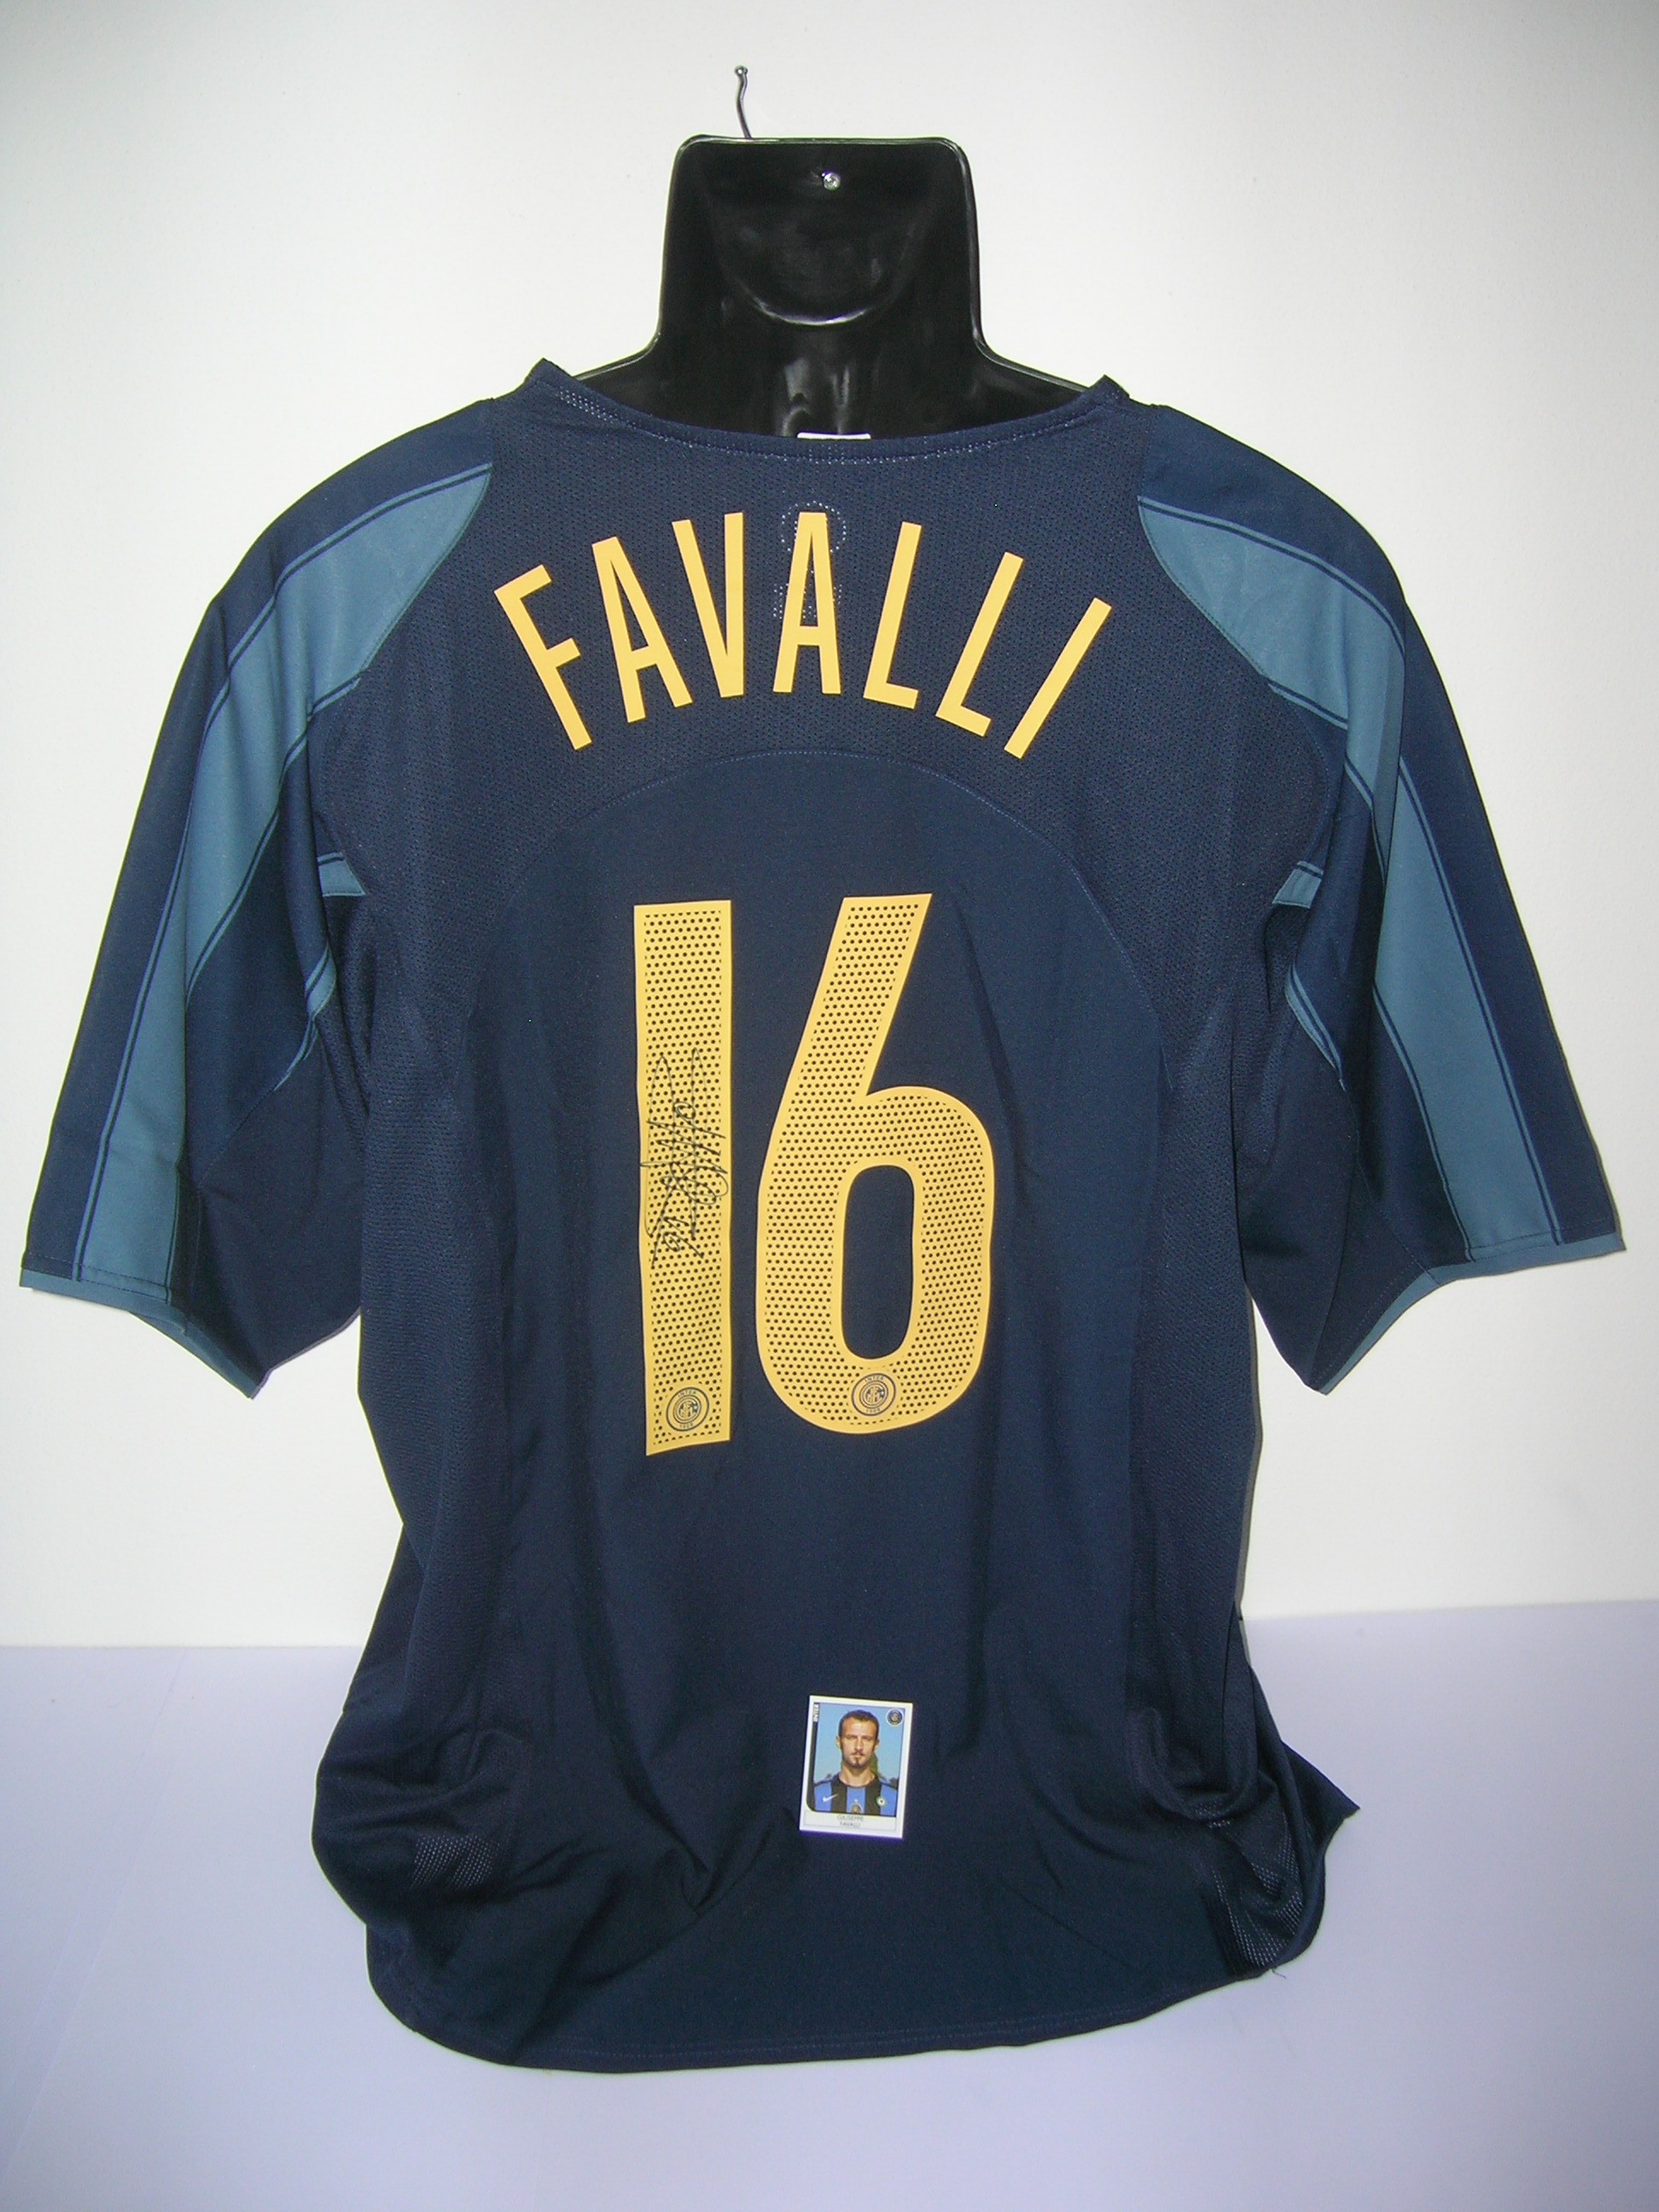 FAVALLI G 2